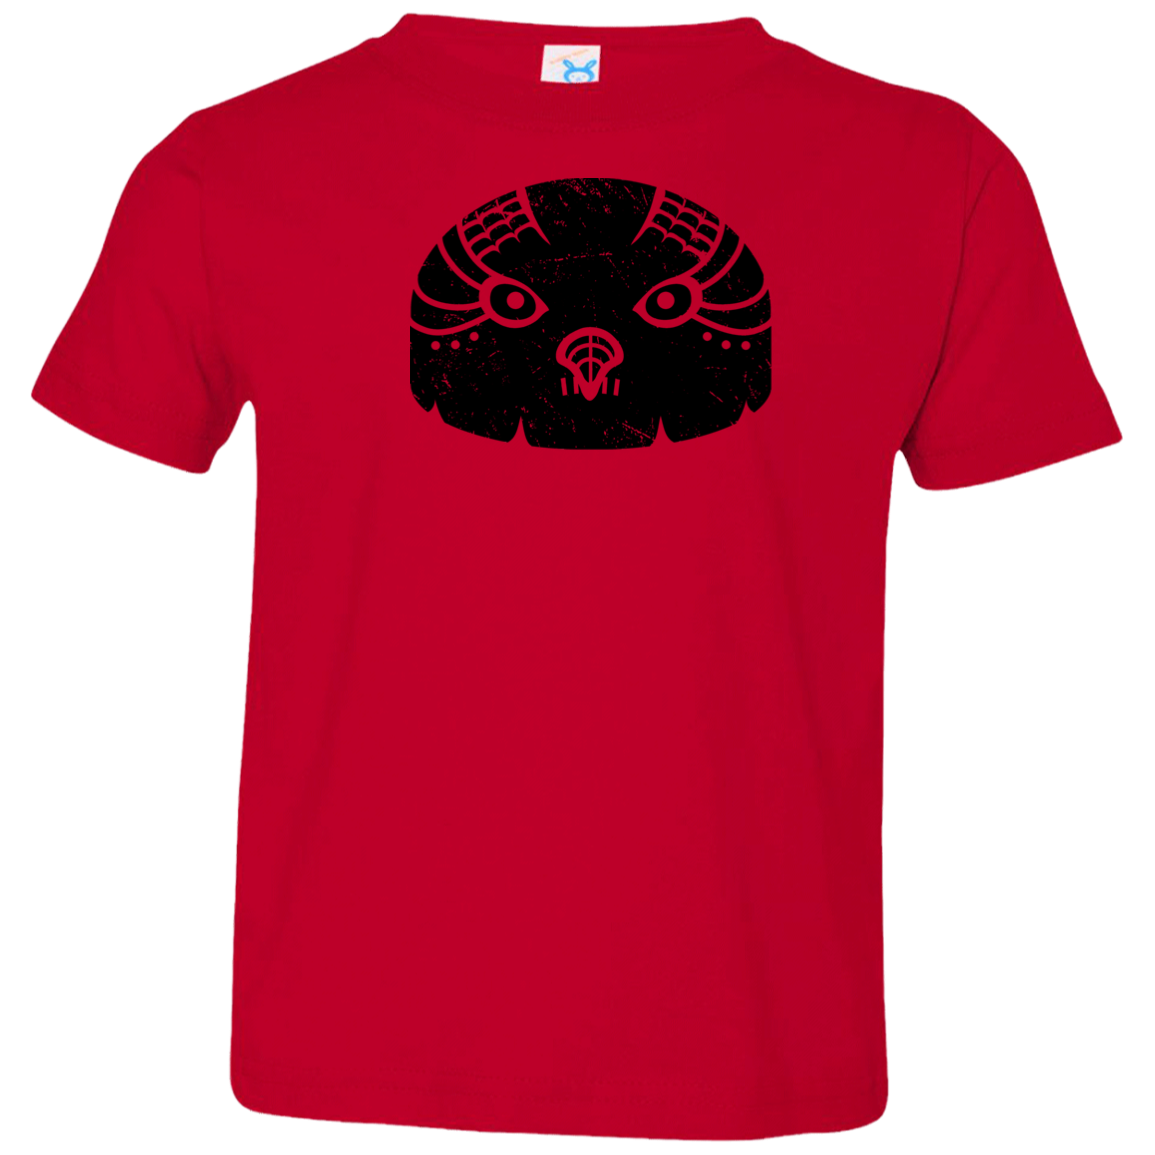 Black Distressed Emblem T-Shirt for Toddlers (Snow Owl/Valor)